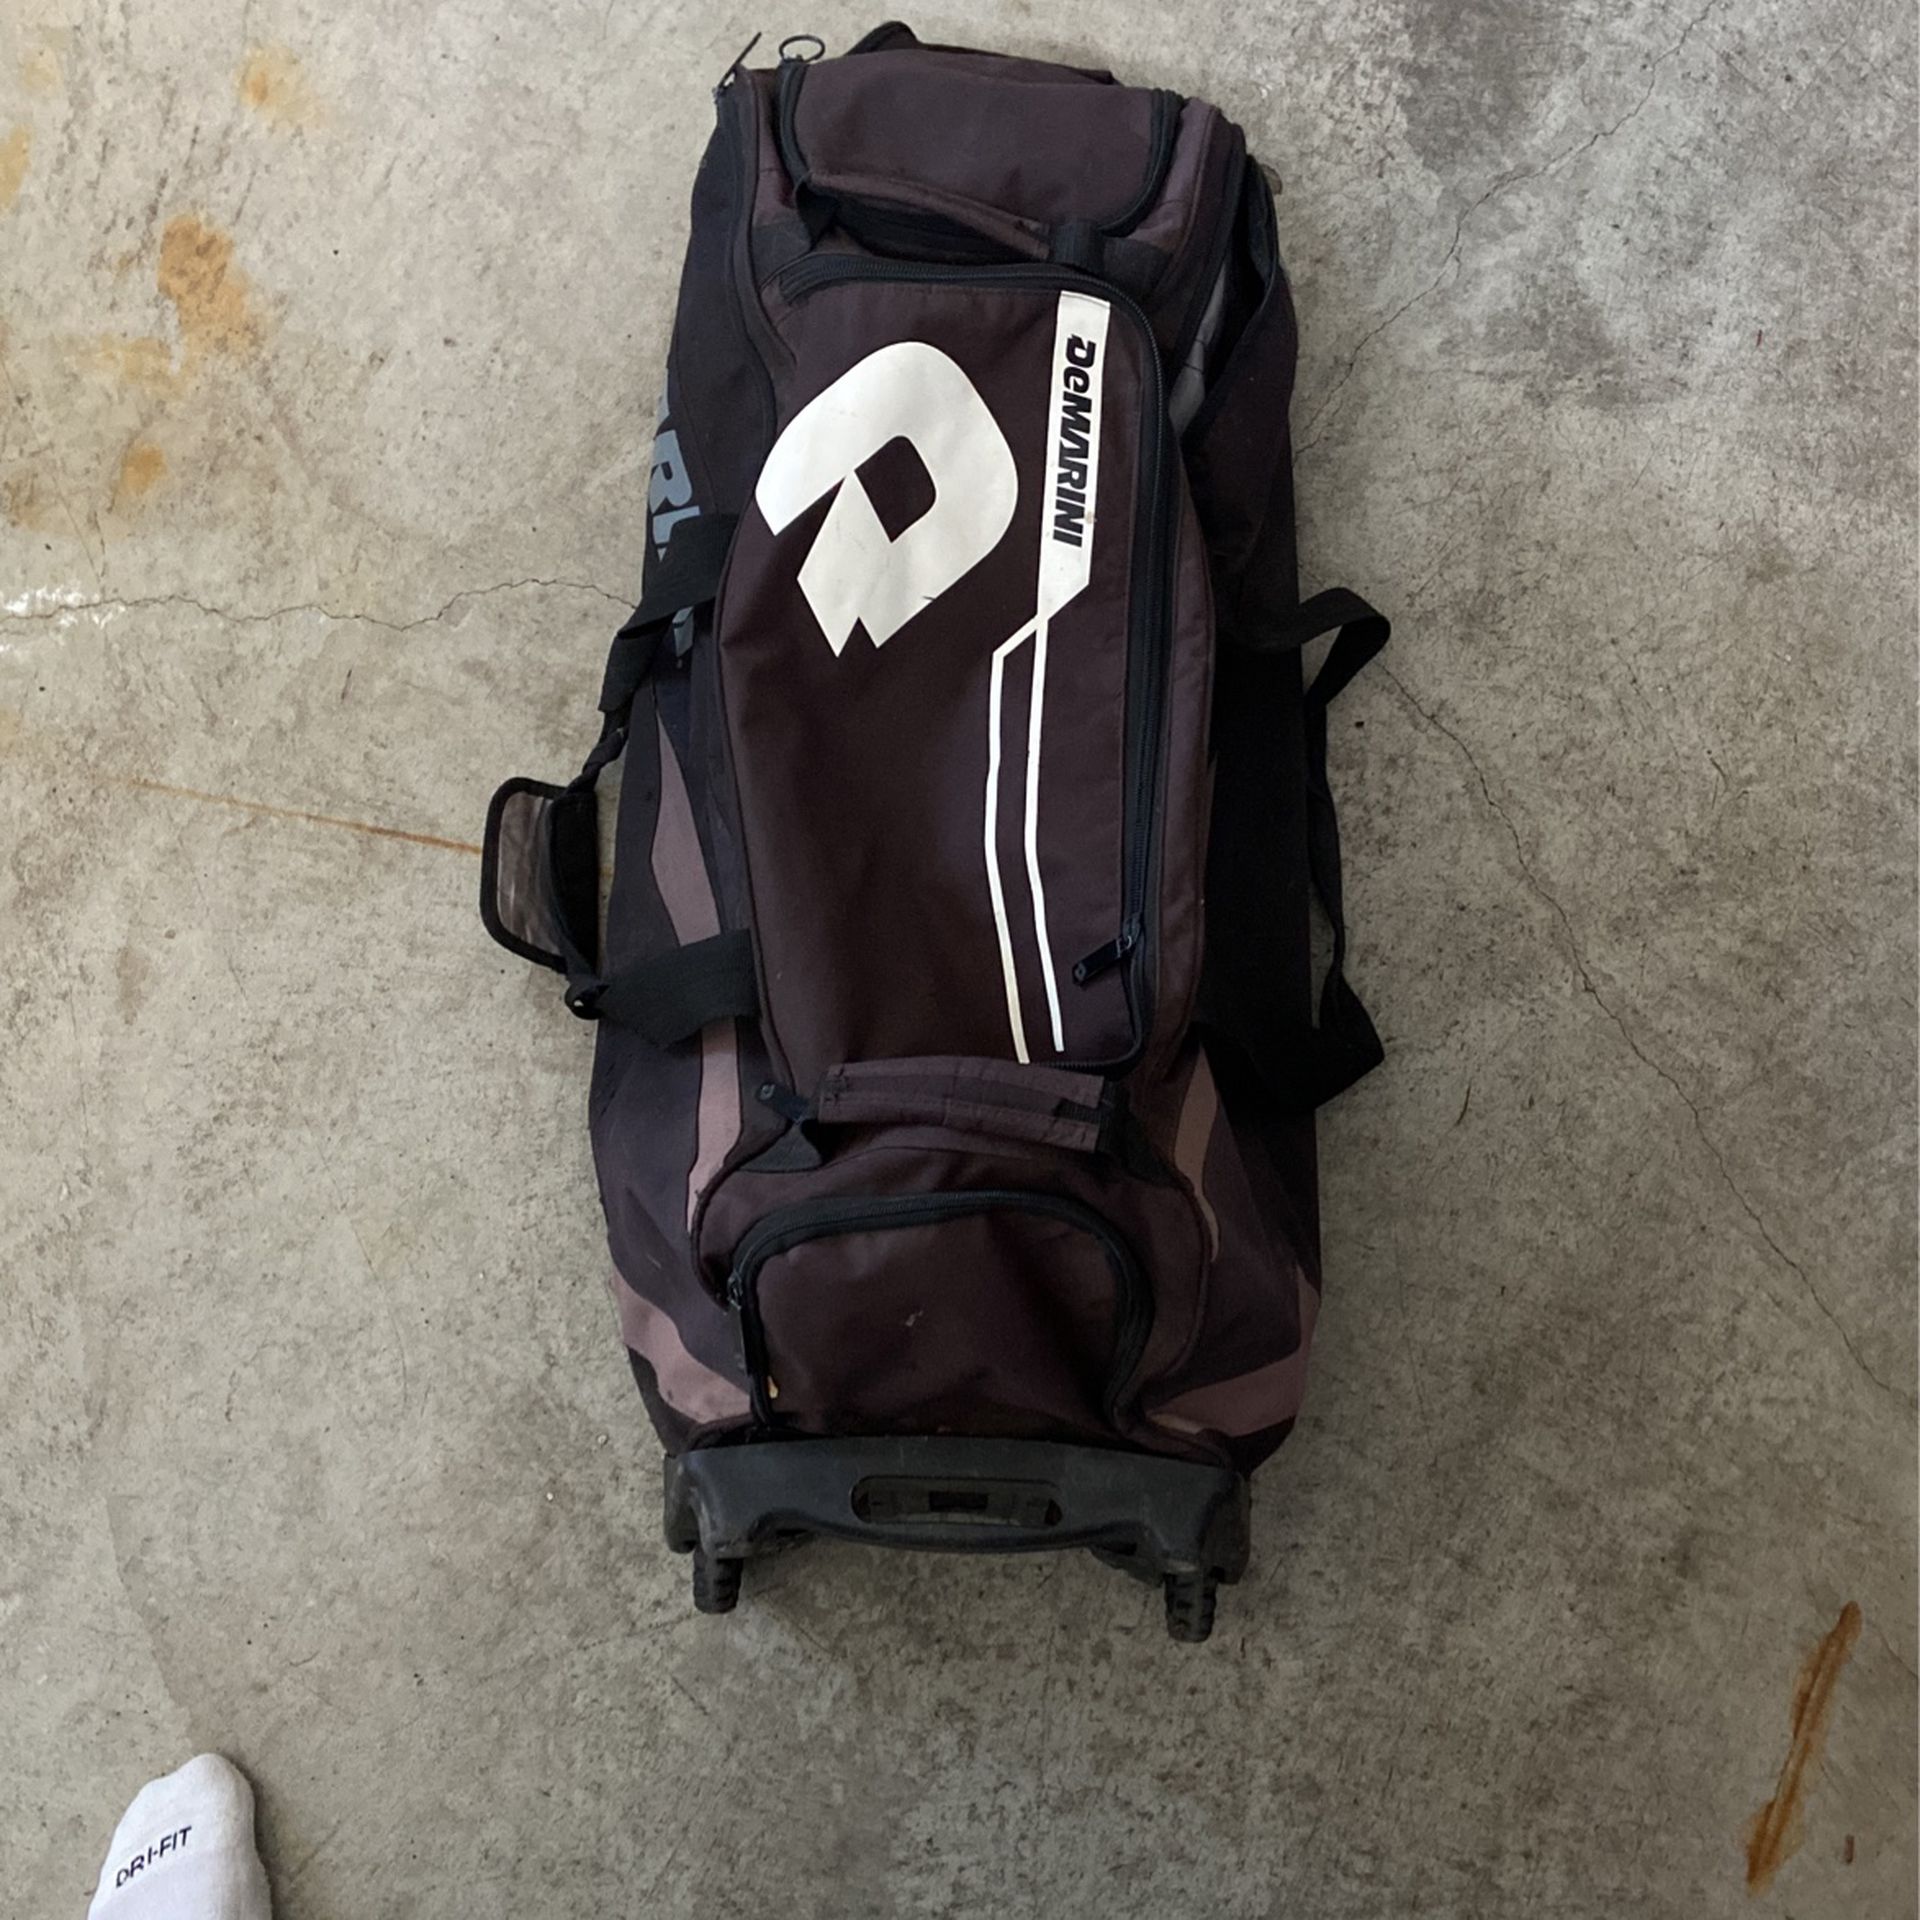 Wheeled DeMarini Baseball Bag